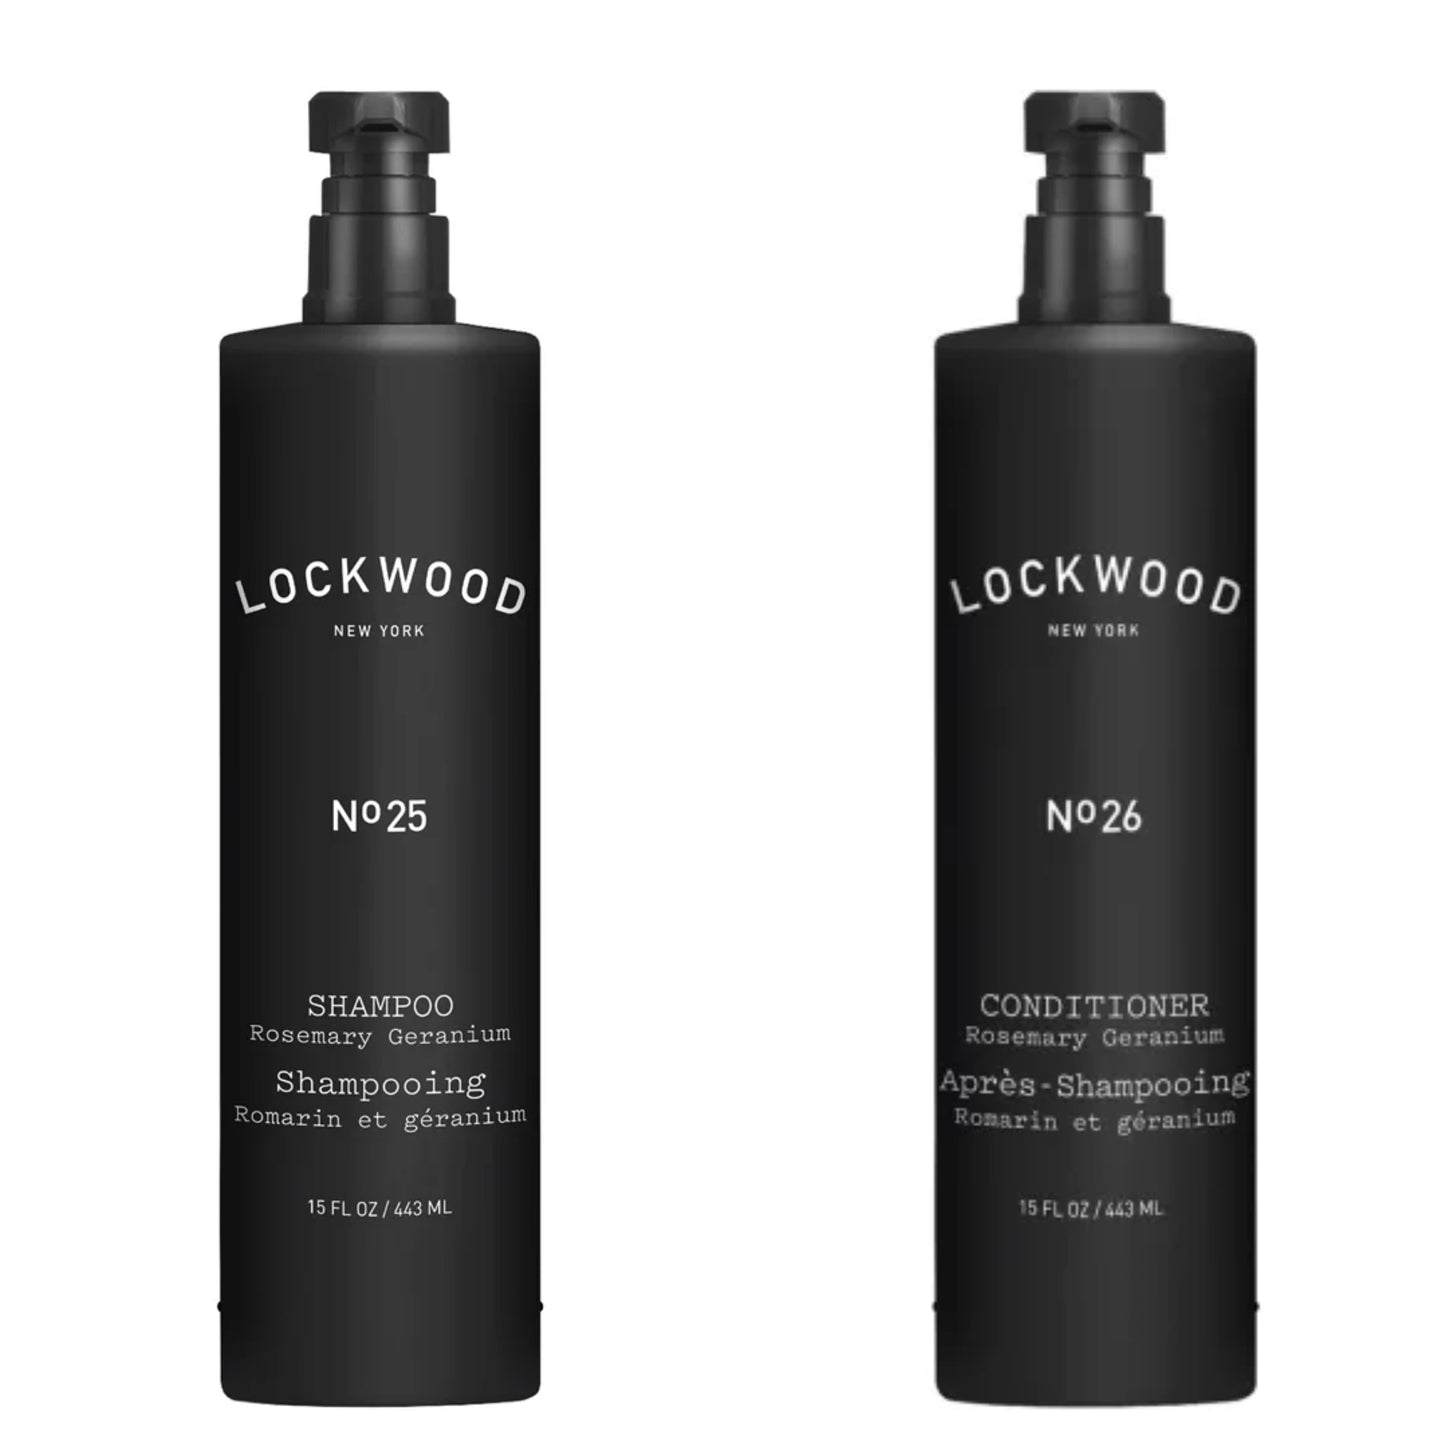 Lockwood New York shampoo and conditioner 15oz bundle